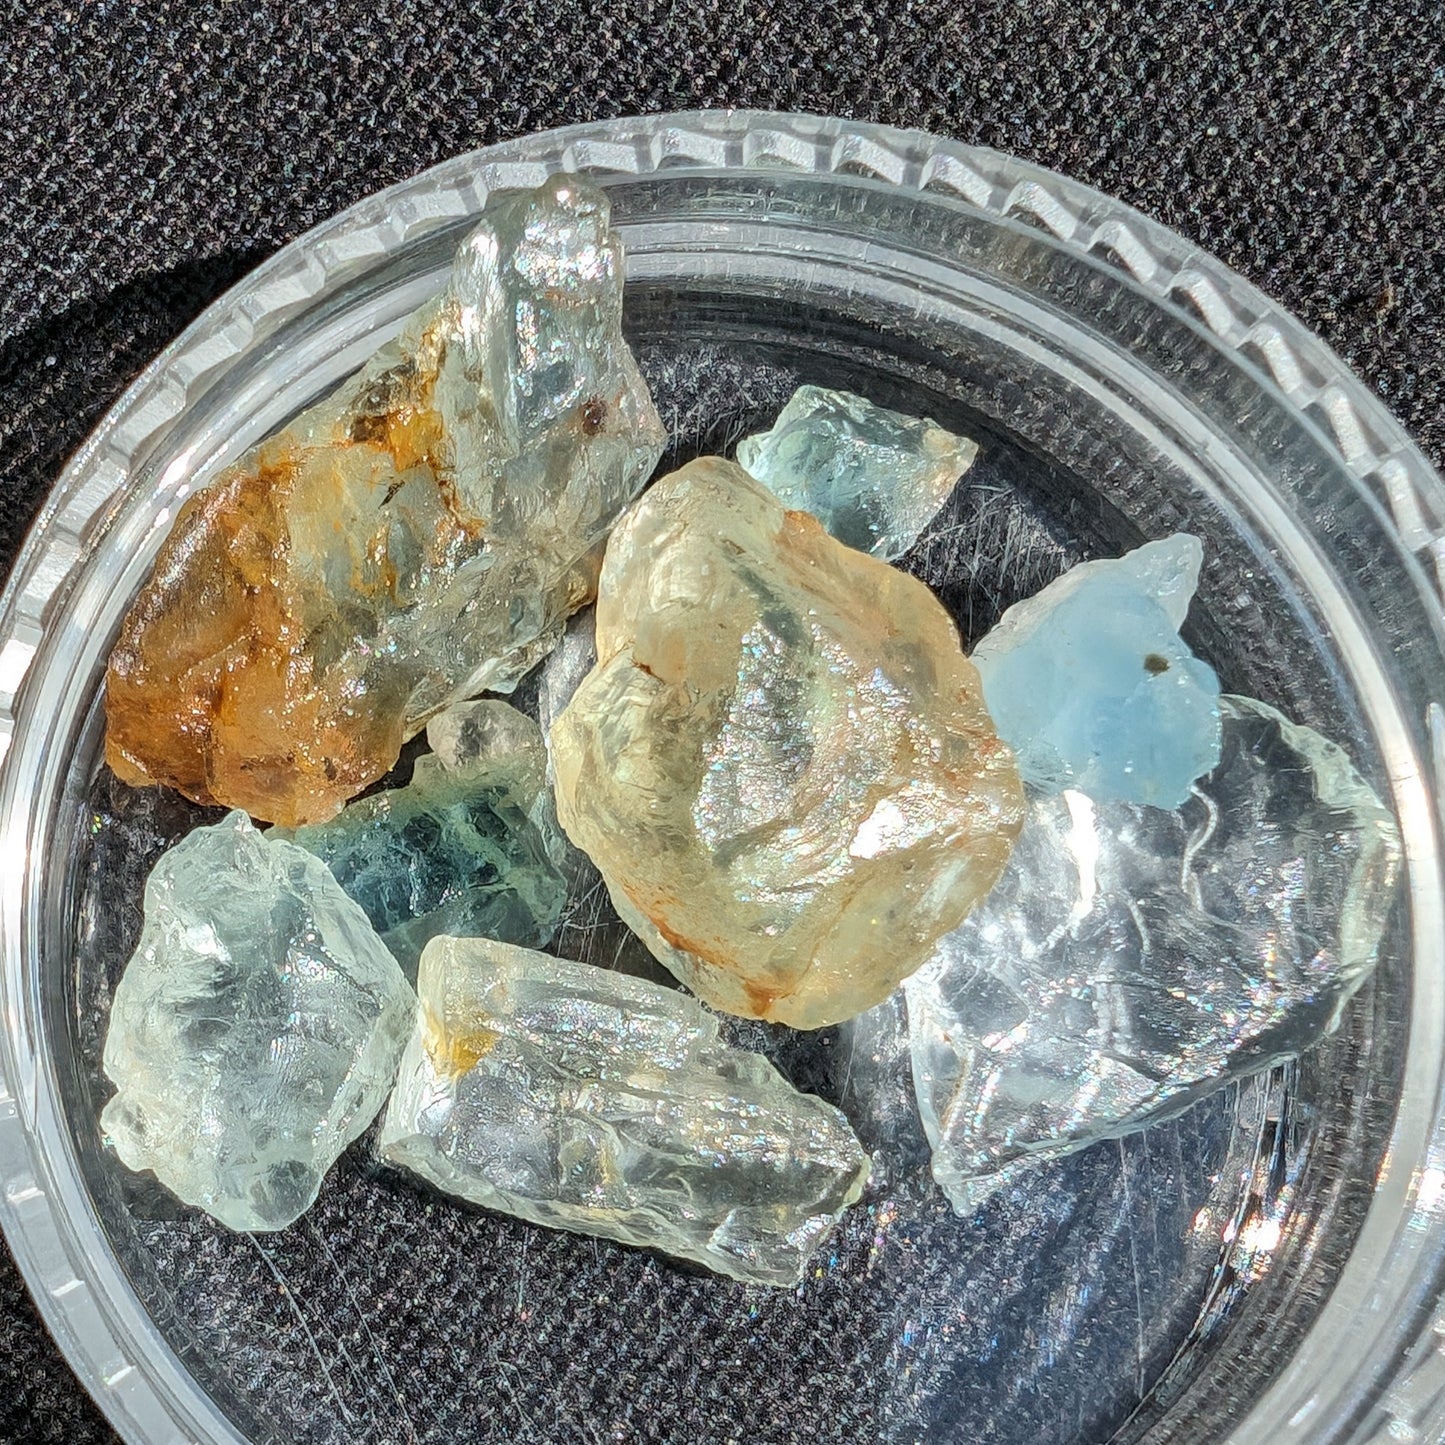 Aquamarine natural 6 crystals 6-7g